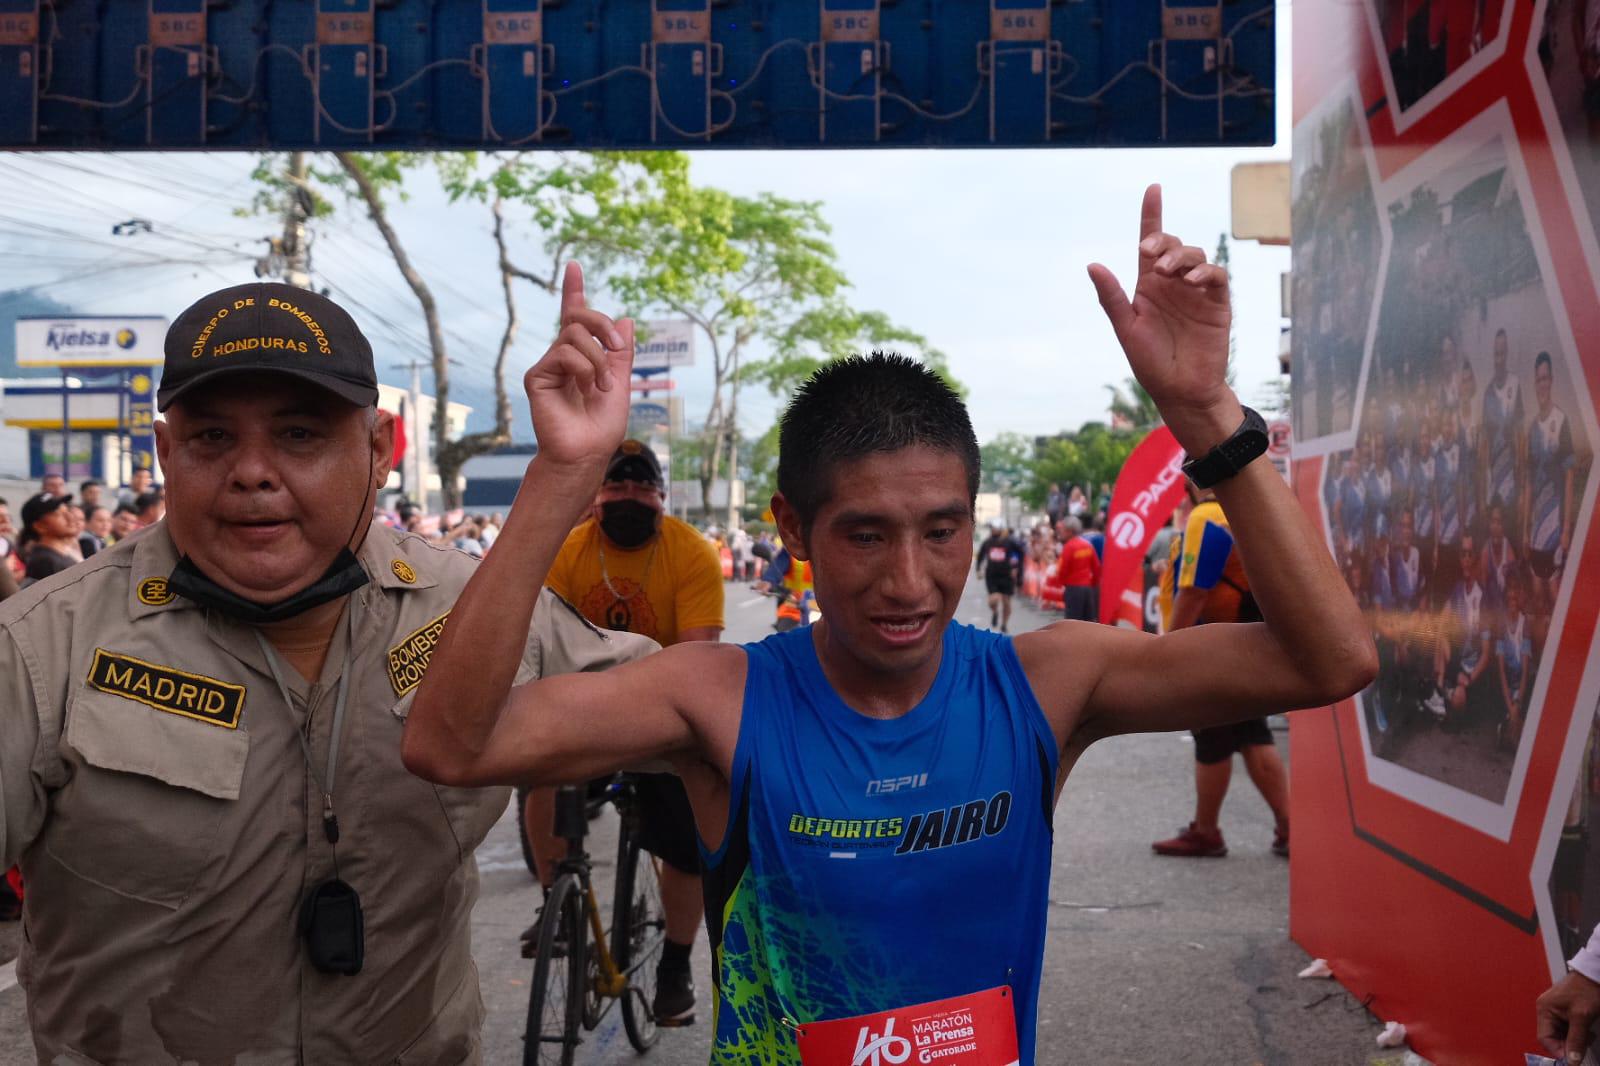 El corredor chapín celebrando tras cruzar la meta de la Maratón de LA PRENSA.